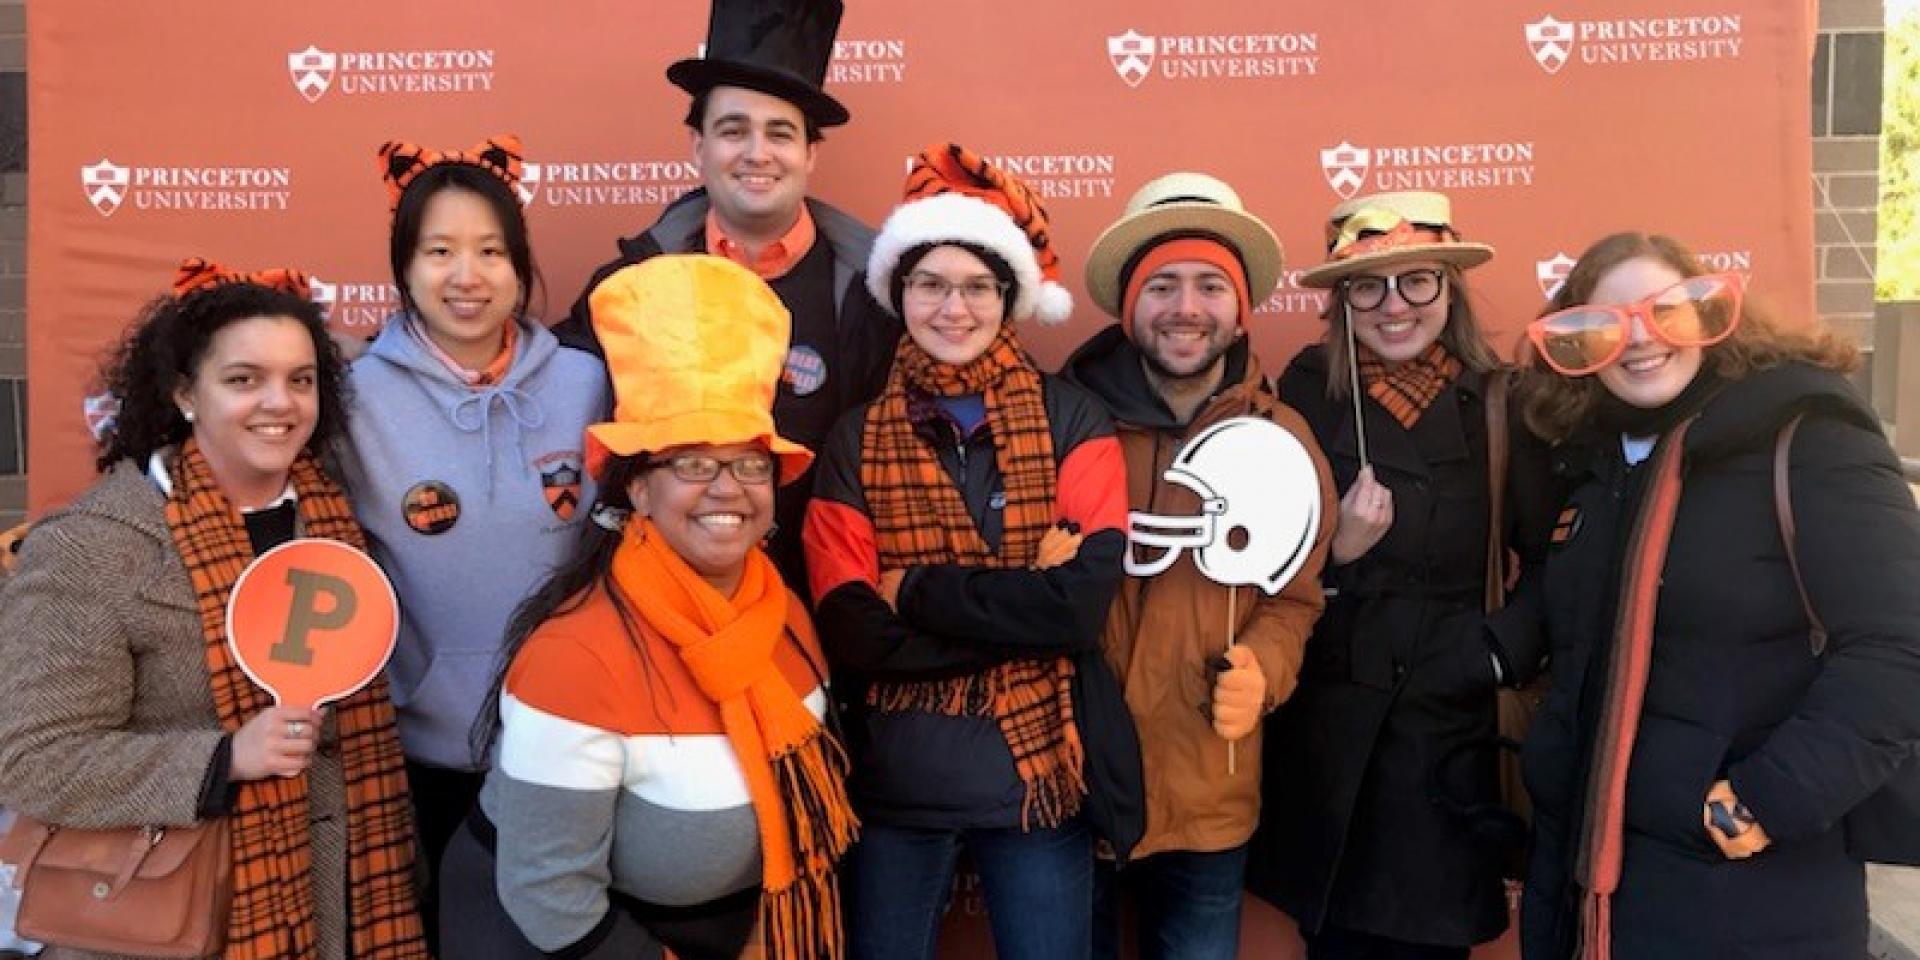 Princeton alumni